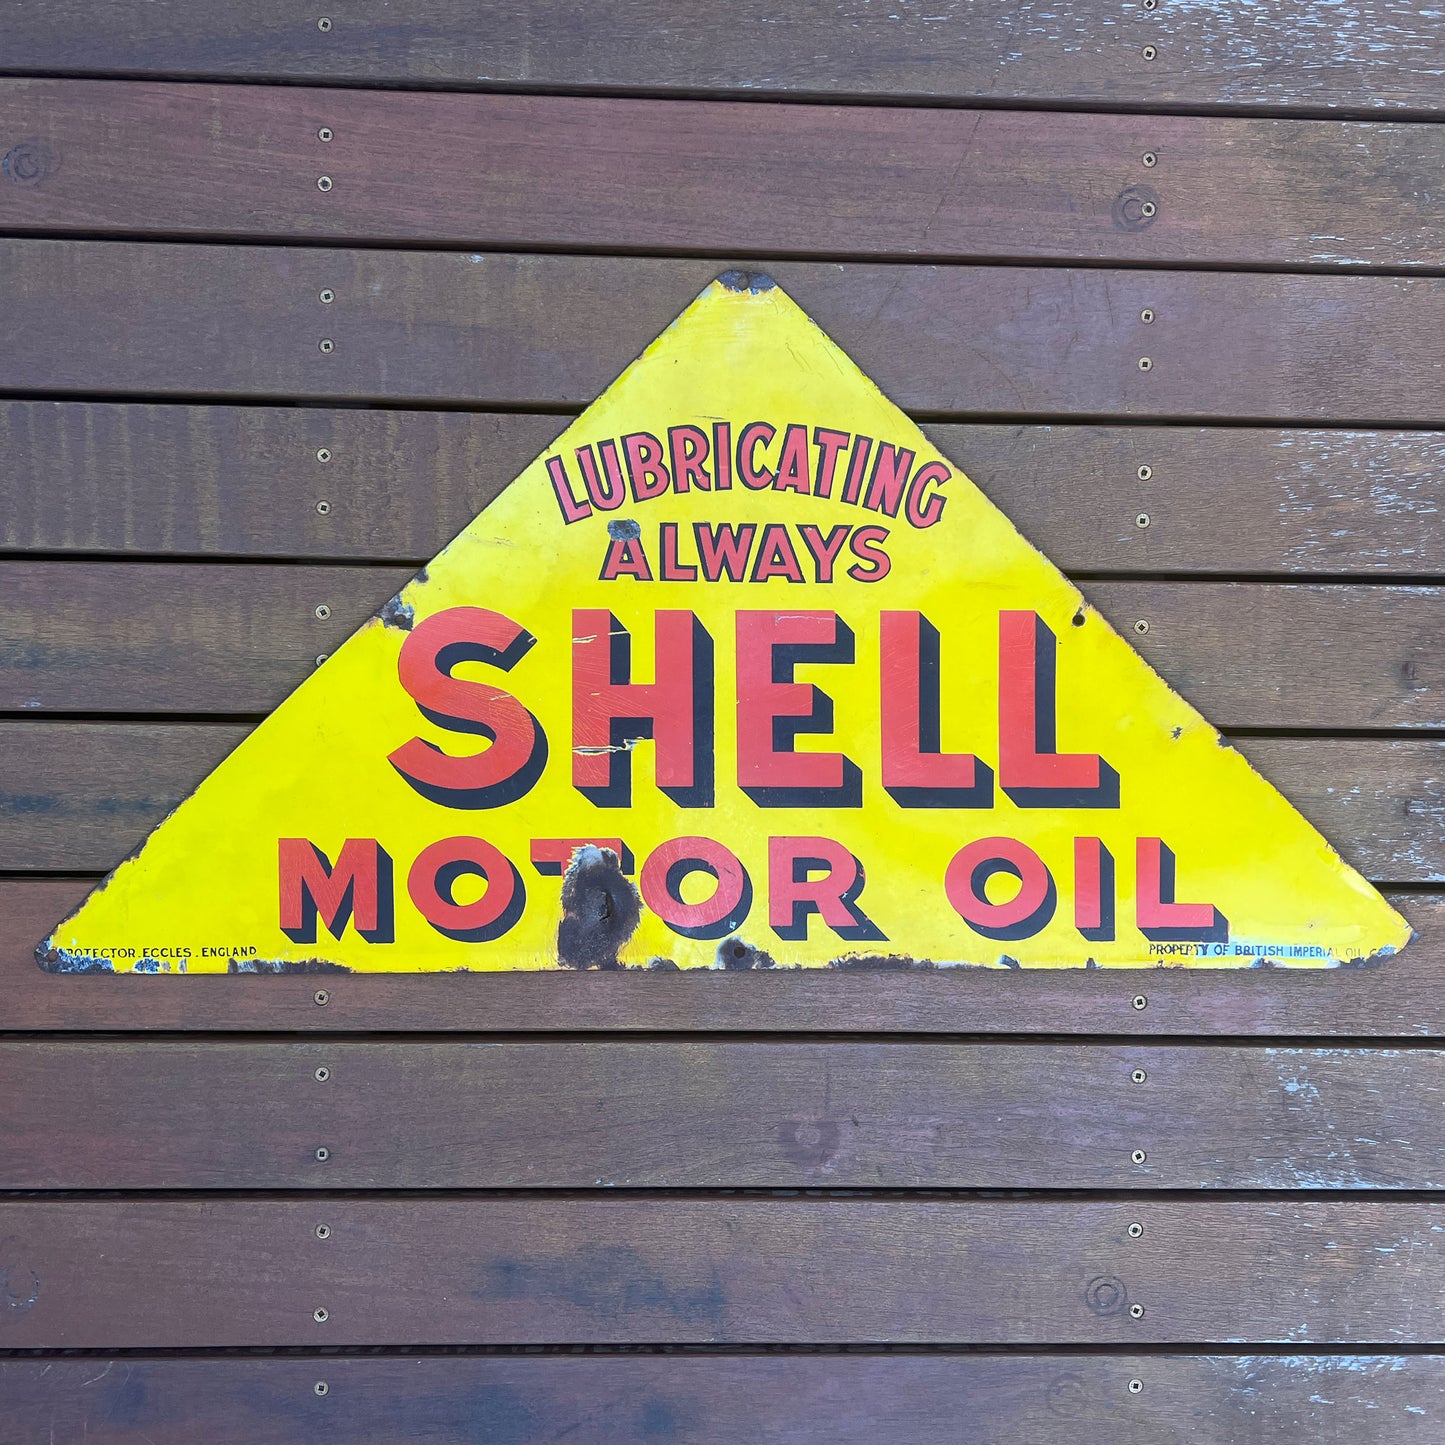 Shell Motor Spirit Lubricating Always Enamel Sign